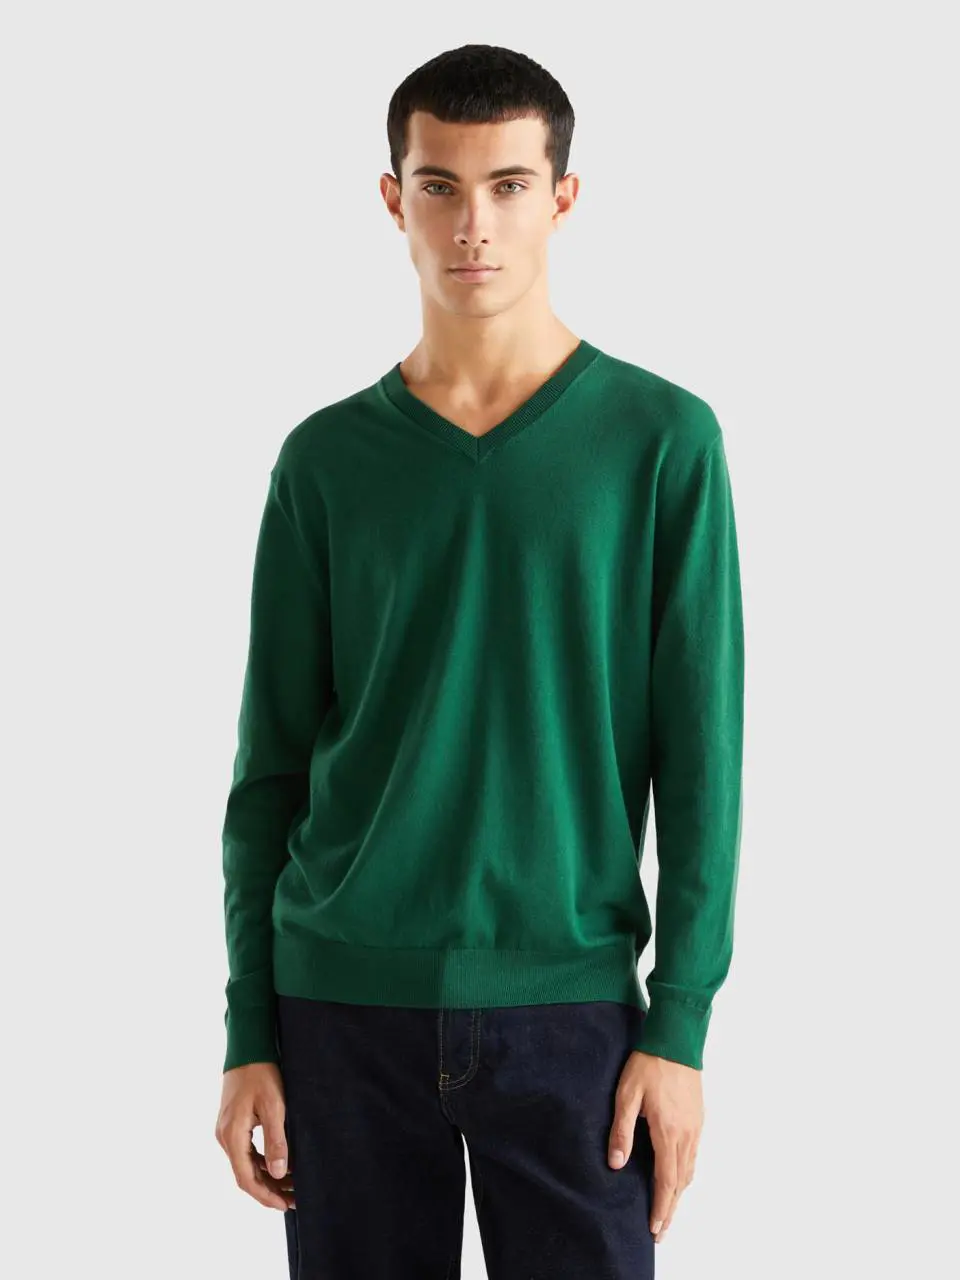 Benetton v-neck sweater in lightweight cotton blend. 1